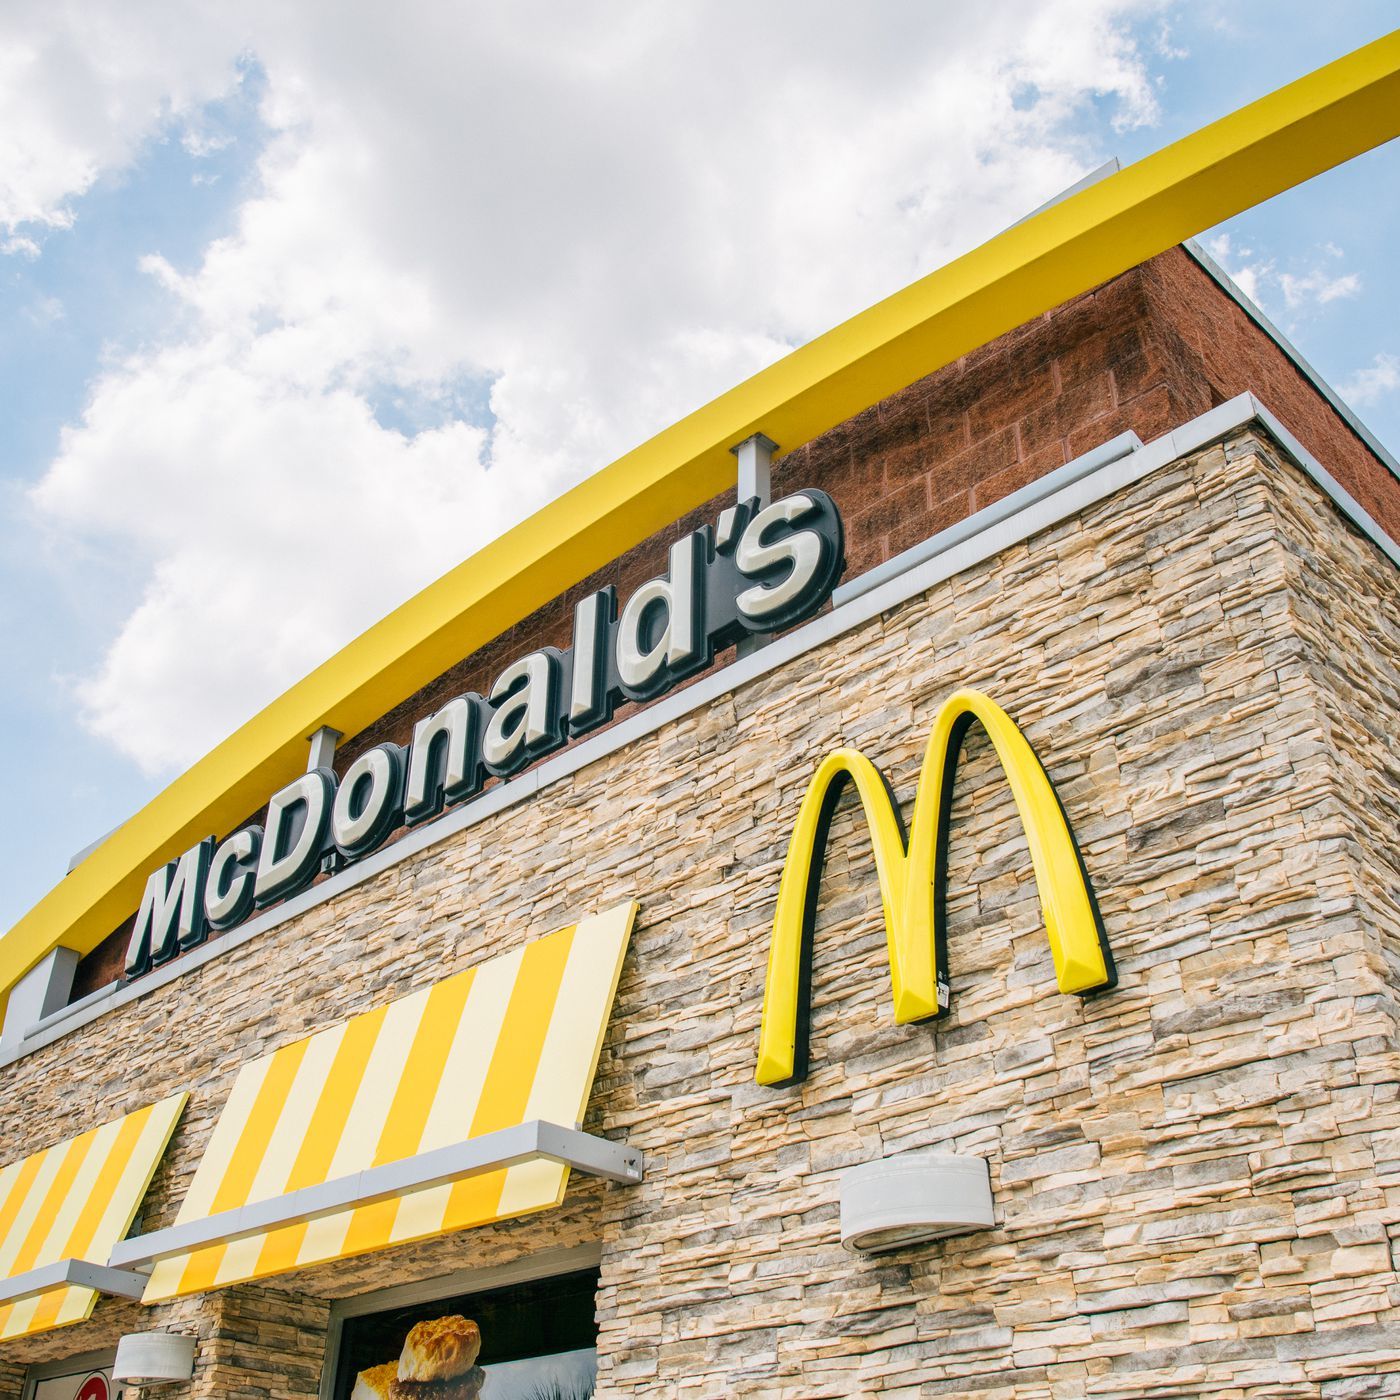  McDonald's Hintergrundbild 1400x1400. Why McDonald's looks sleek and boring now